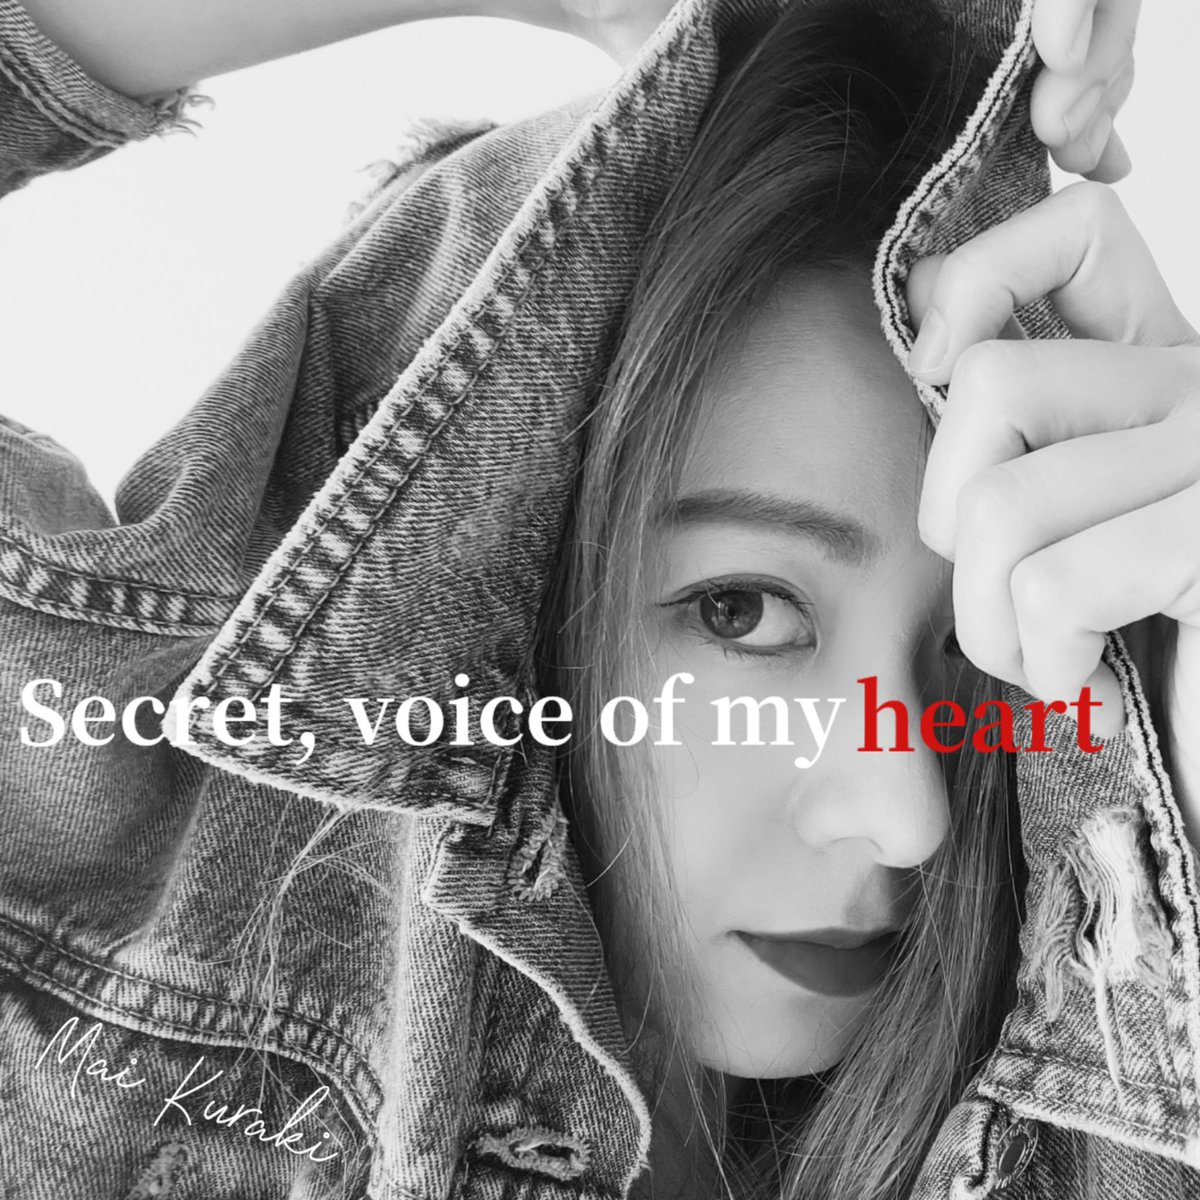 Cover art for『Mai Kuraki - Secret, voice of my heart』from the release『Secret, voice of my heart』